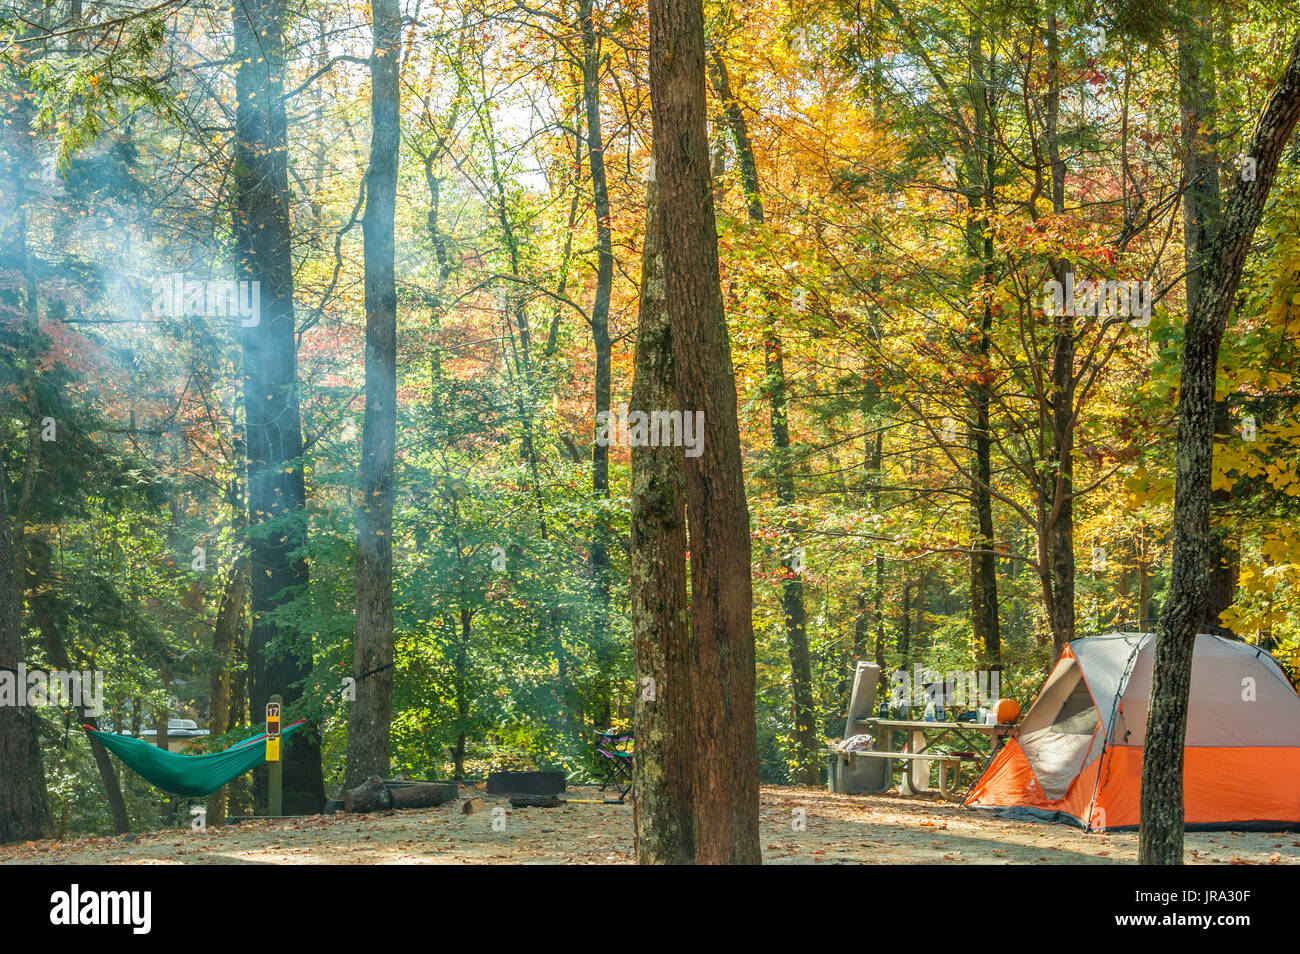 Campfire smoke fotografías e imágenes de alta resolución - Alamy